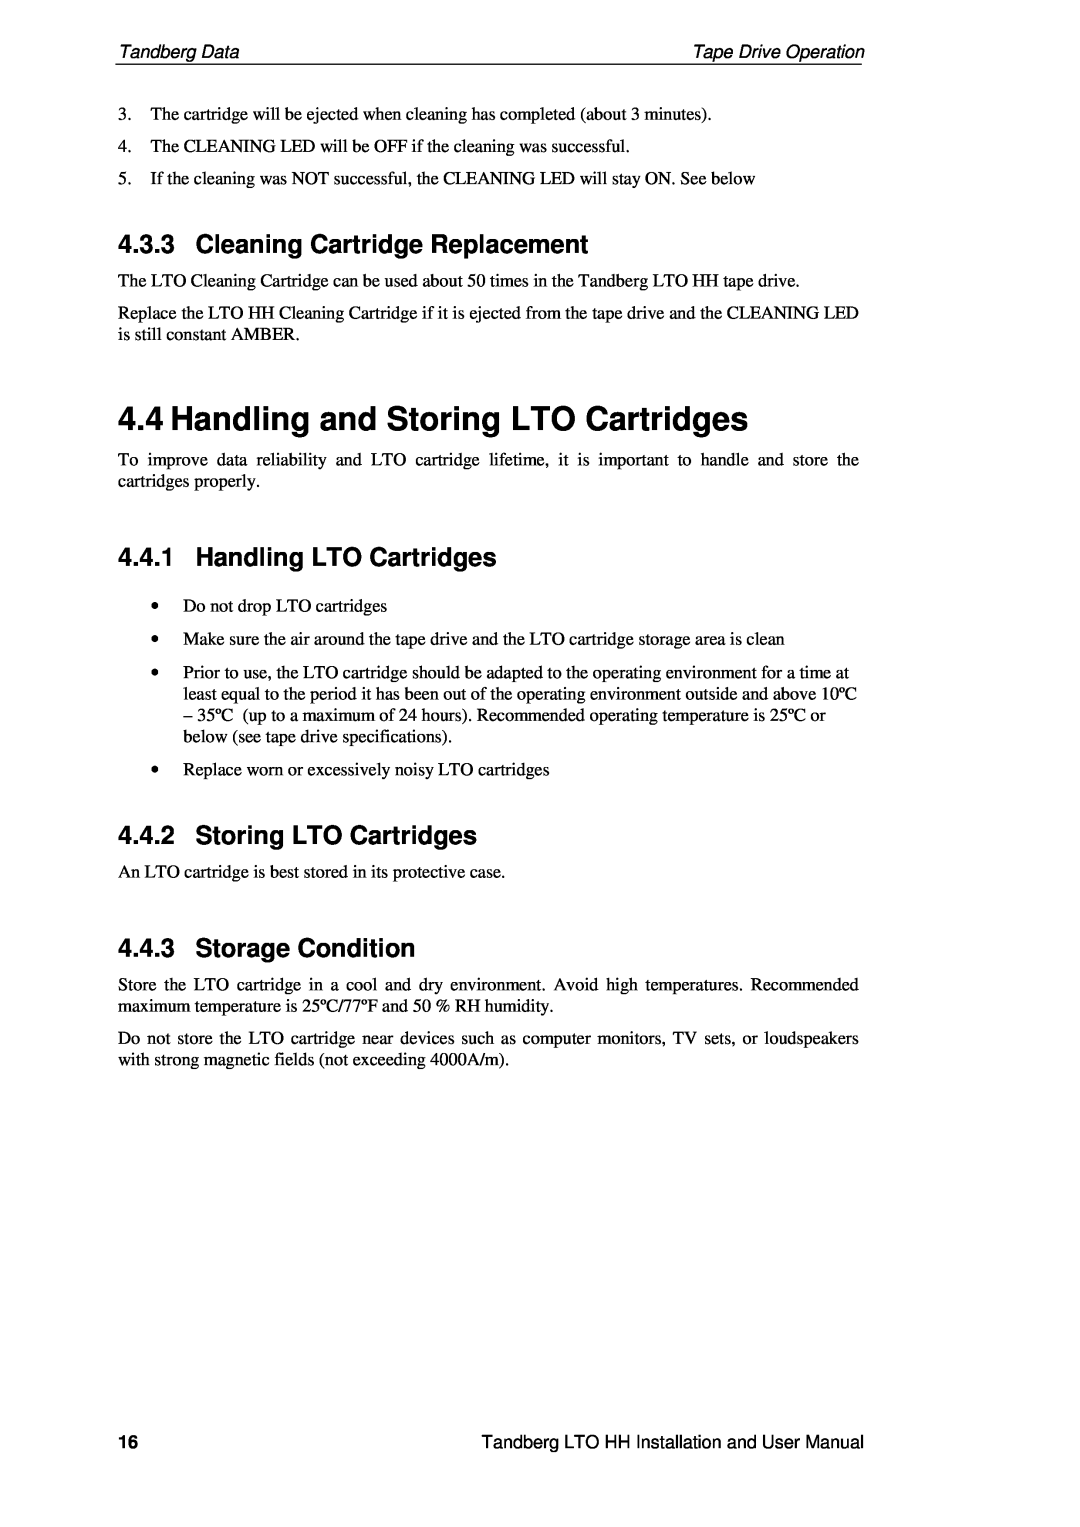 Tandberg Data LTO-1 HH Handling and Storing LTO Cartridges, Cleaning Cartridge Replacement, Handling LTO Cartridges 